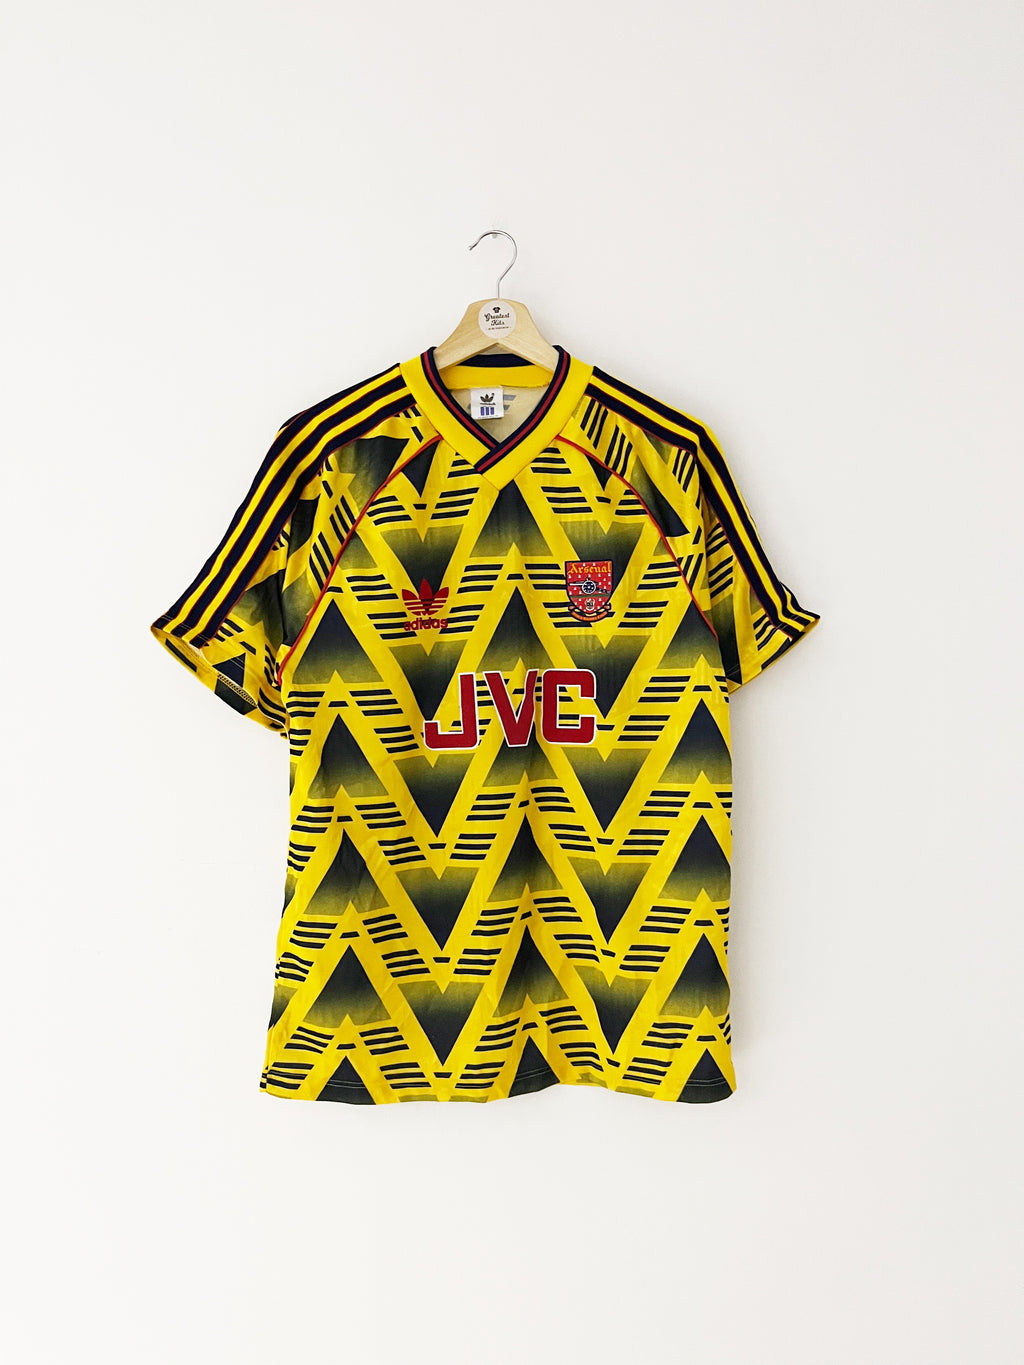 GUNNERS Bruised Banana REMAKE 1991-93 adidas Arsenal Away Shirt